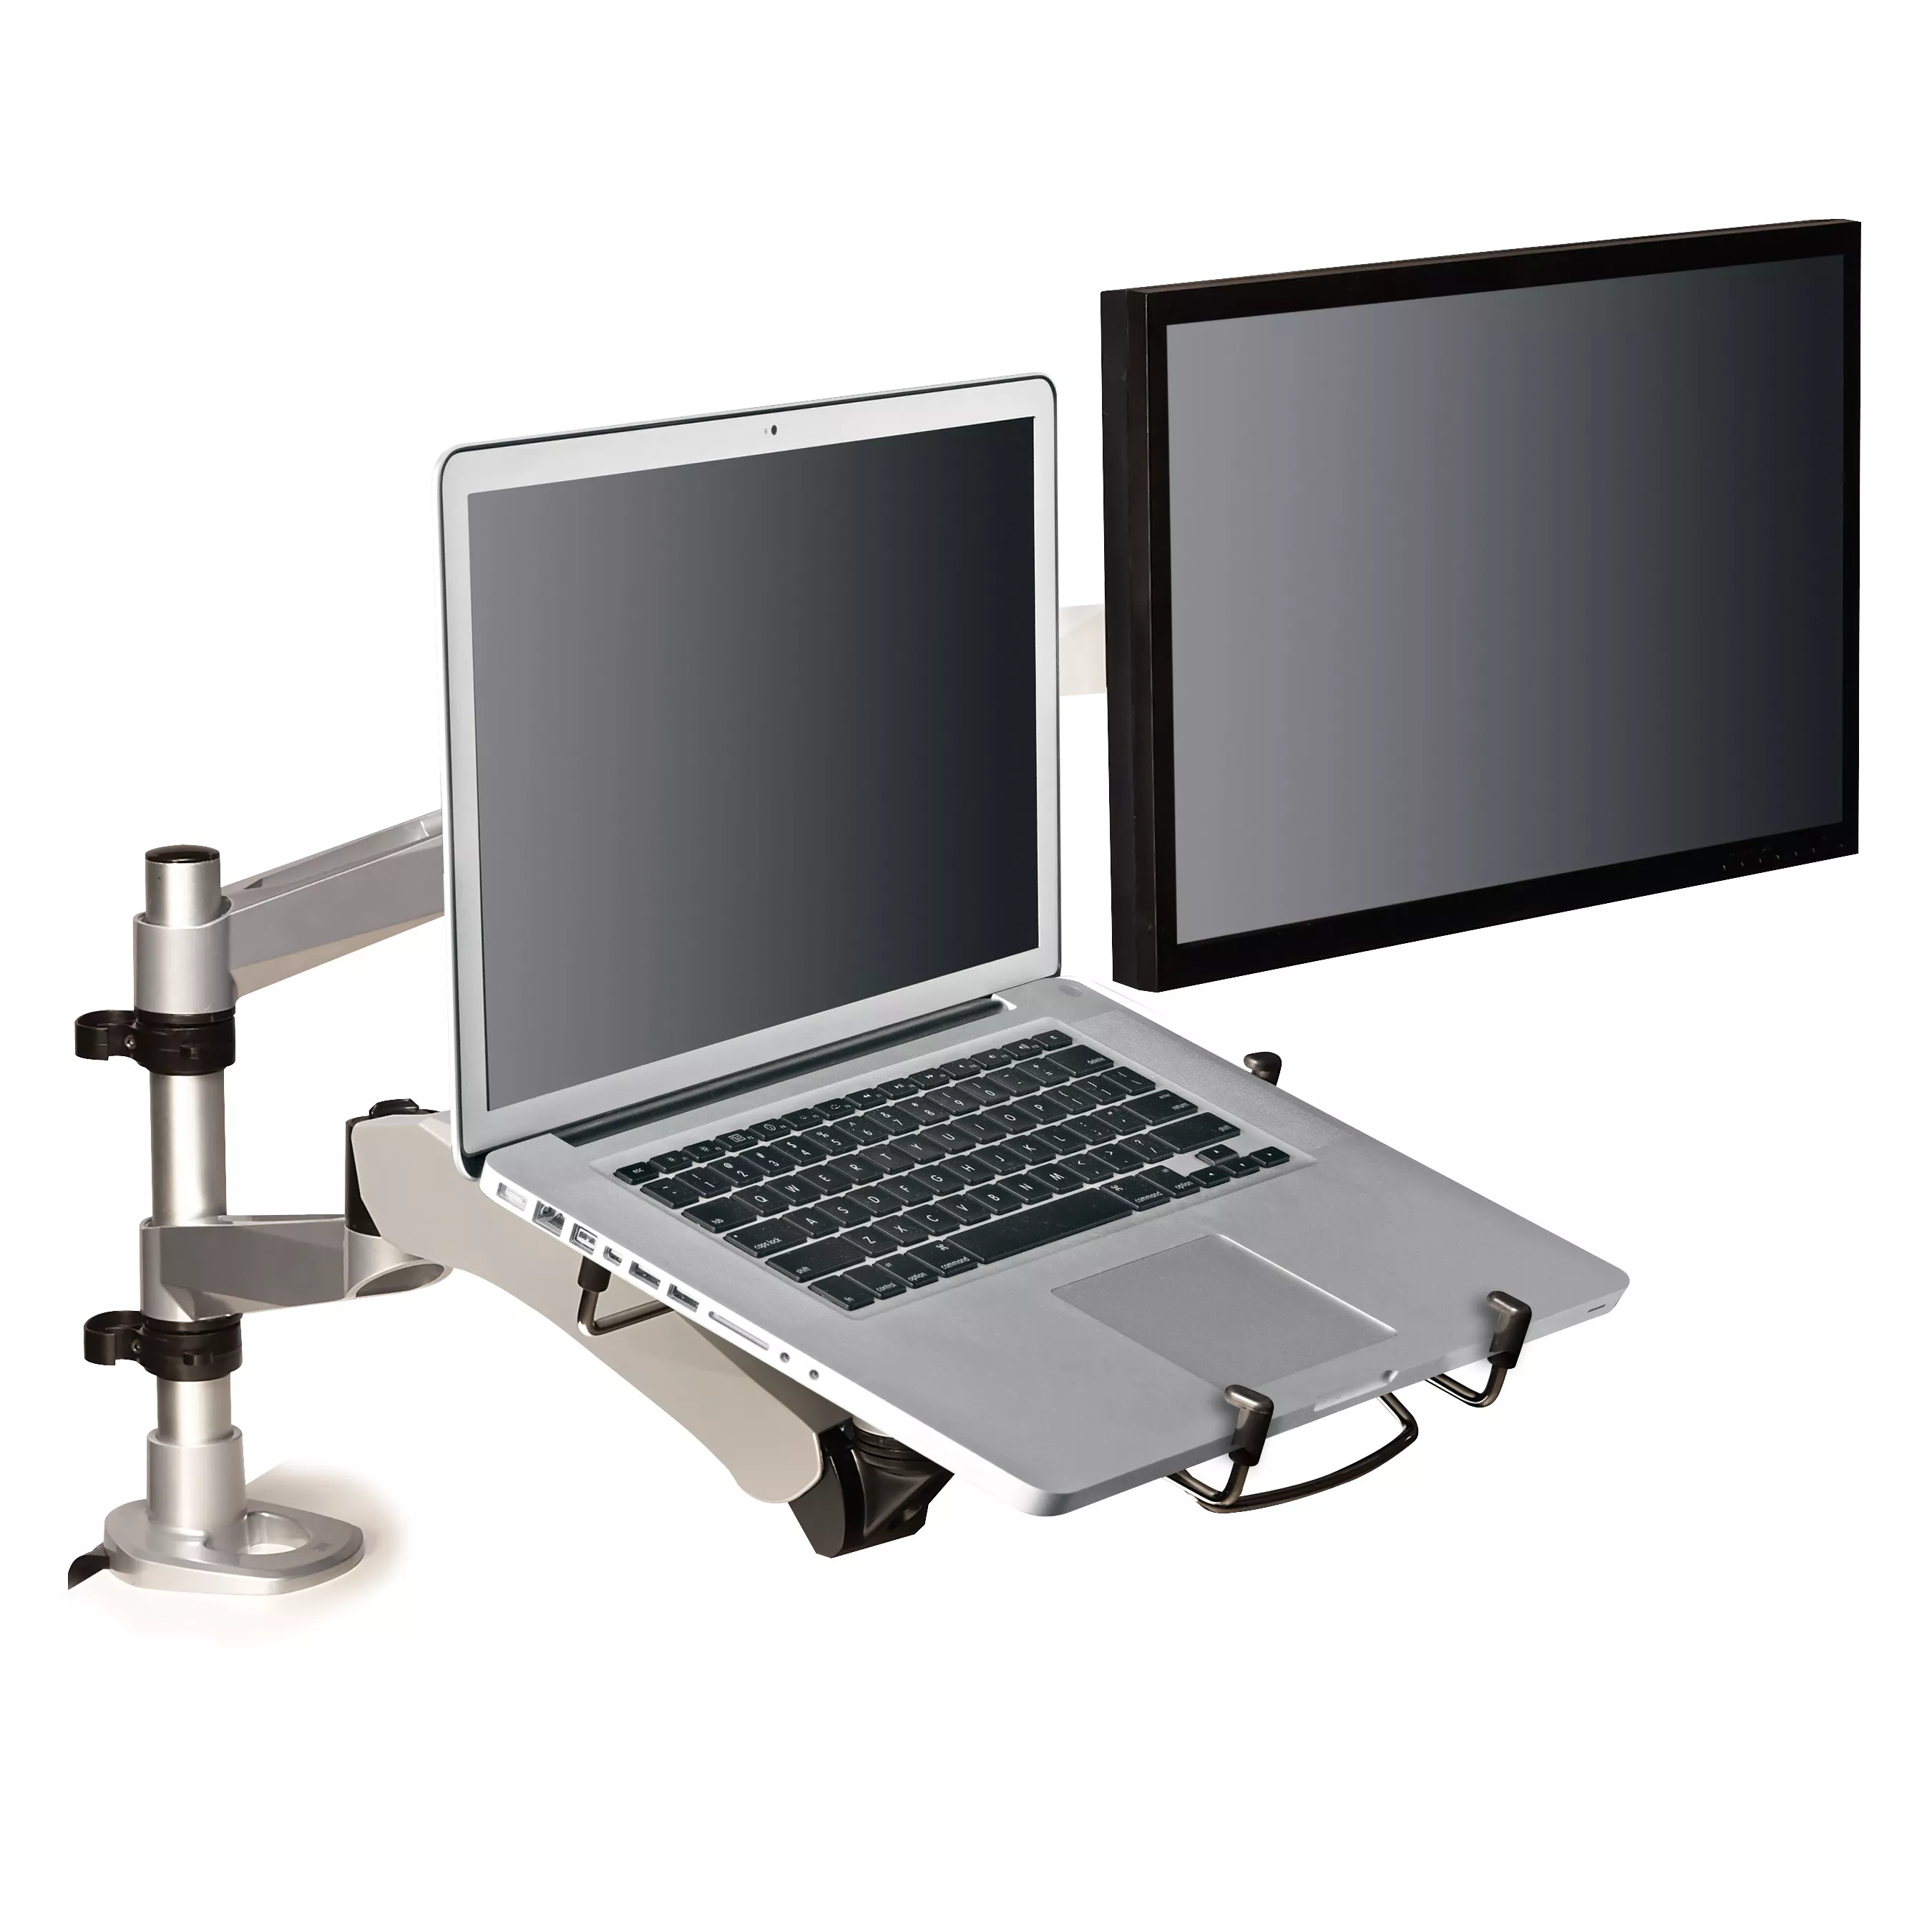 SKU 7100150016 | 3M™ Monitor Stand